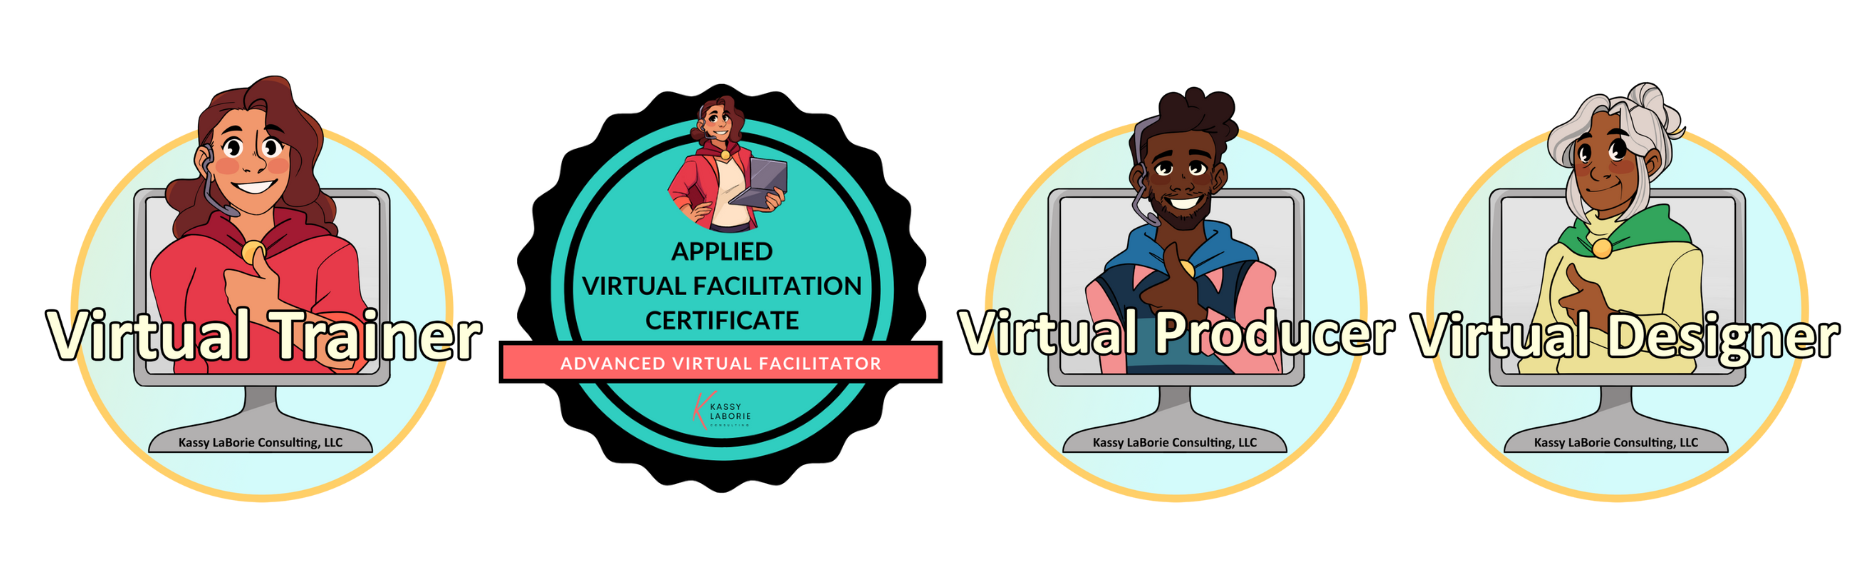 Four badges: Virtual Trainer Applied Virtual Facilitation Certificate Virtual Producer Virtual Designer